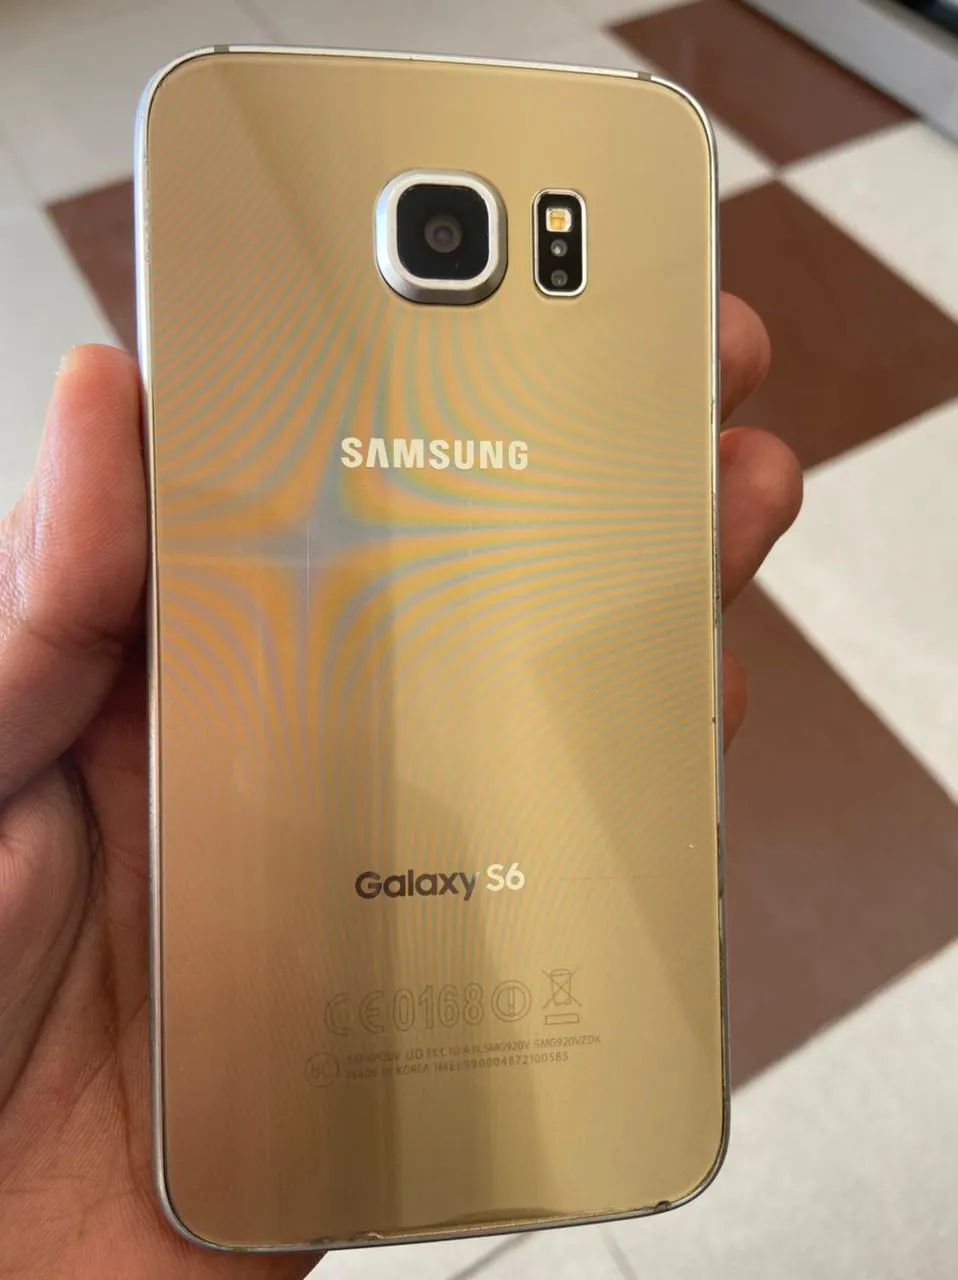 Samsung Galaxy S6 - photo 1